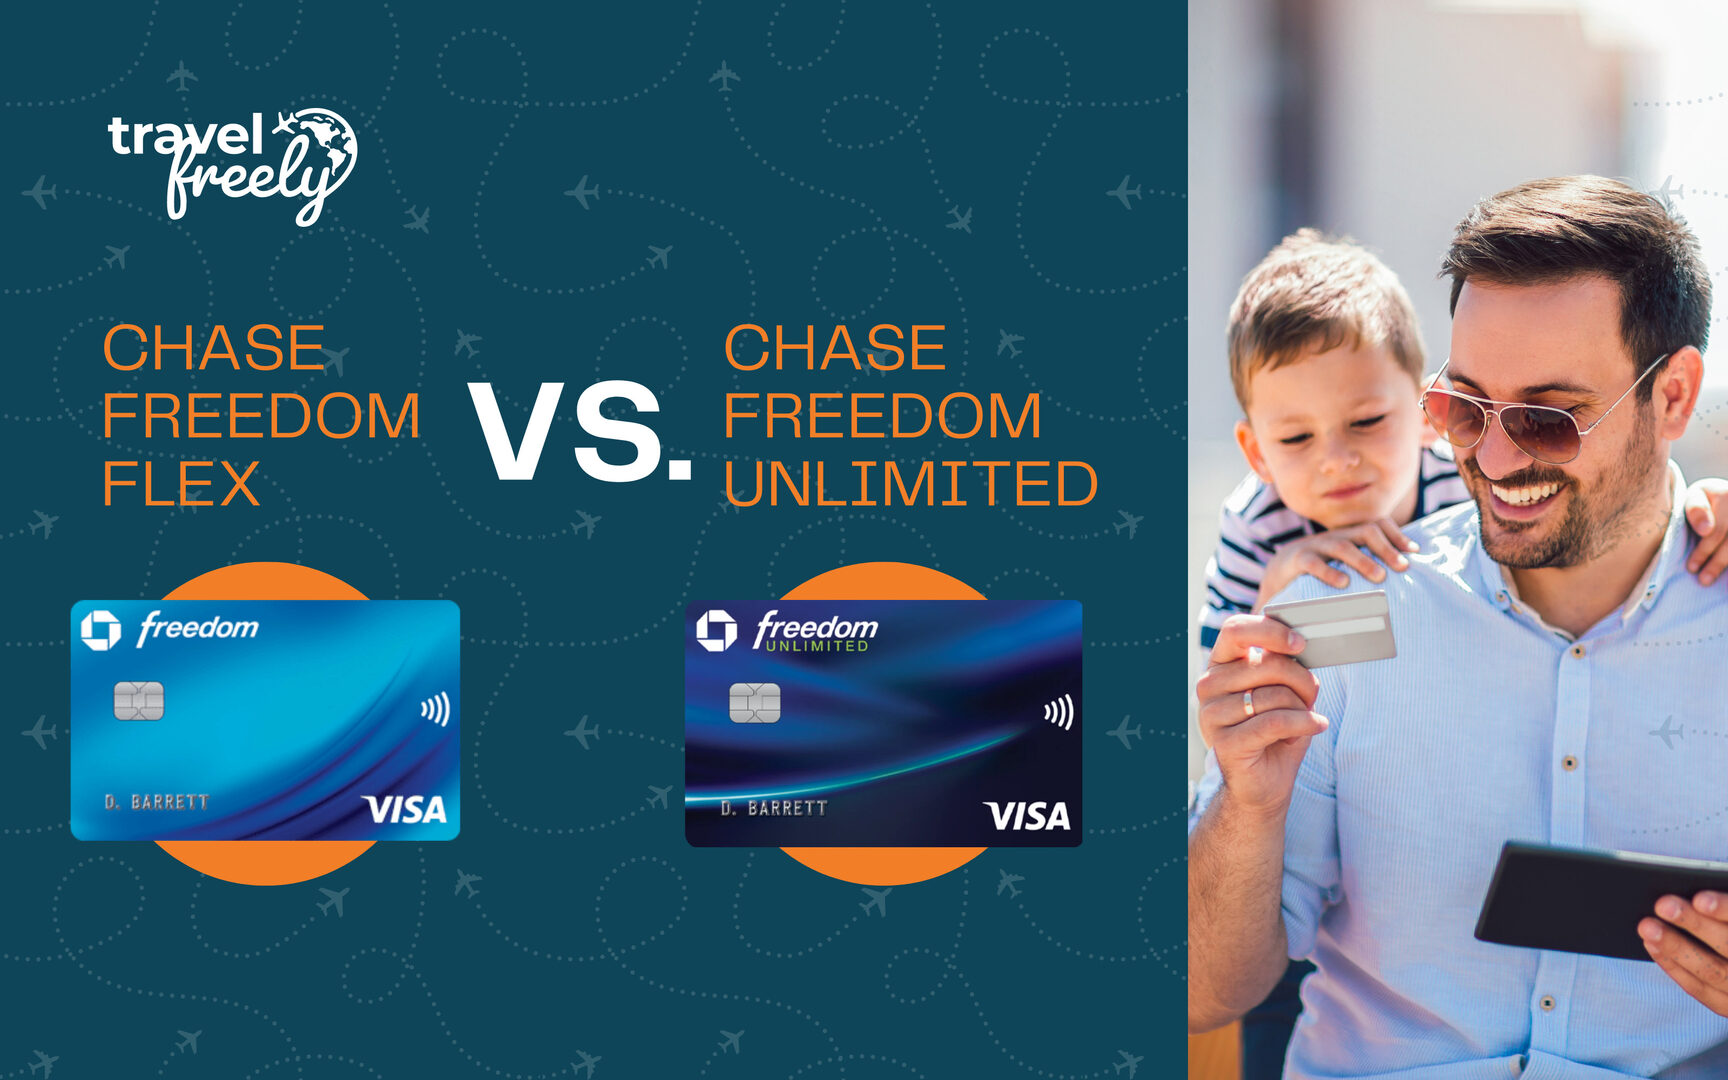 Chase Freedom Unlimited vs. Chase Freedom Flex Travel Freely